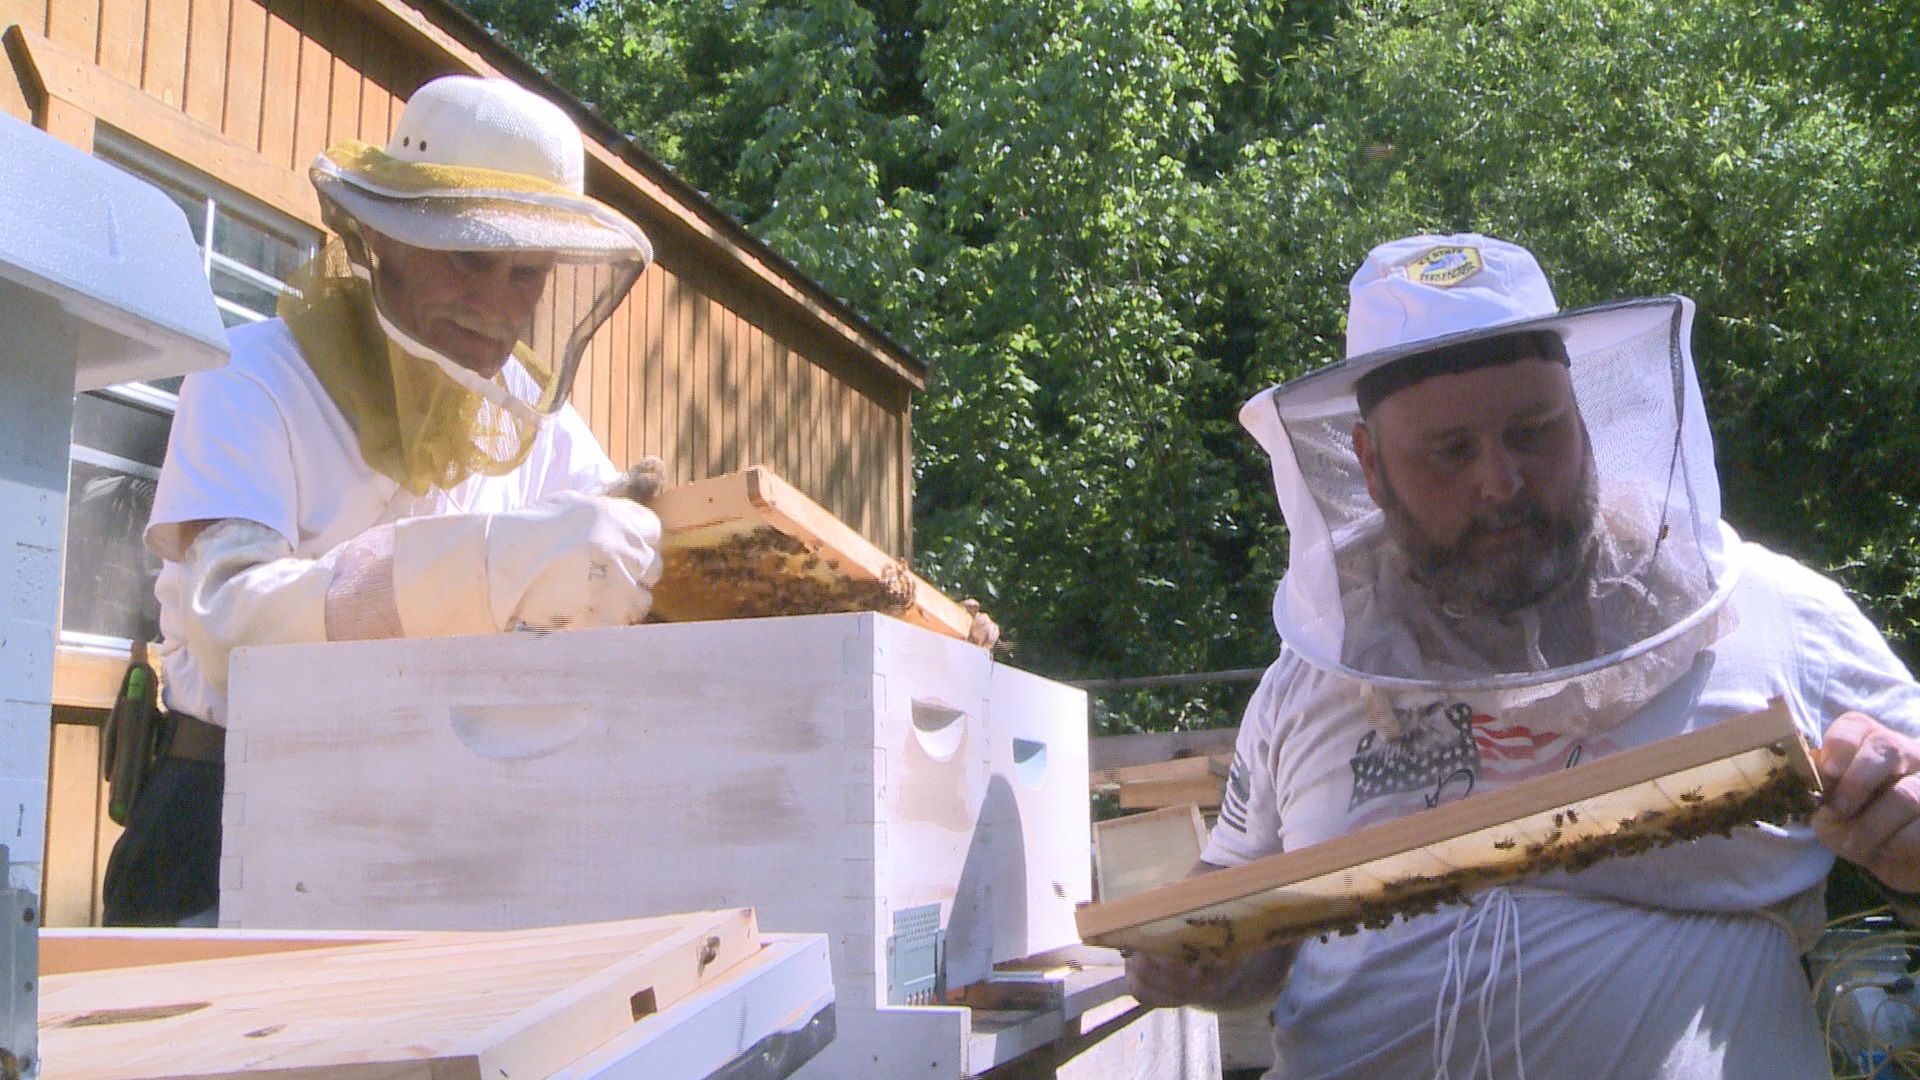 The Kentucky Bee Man